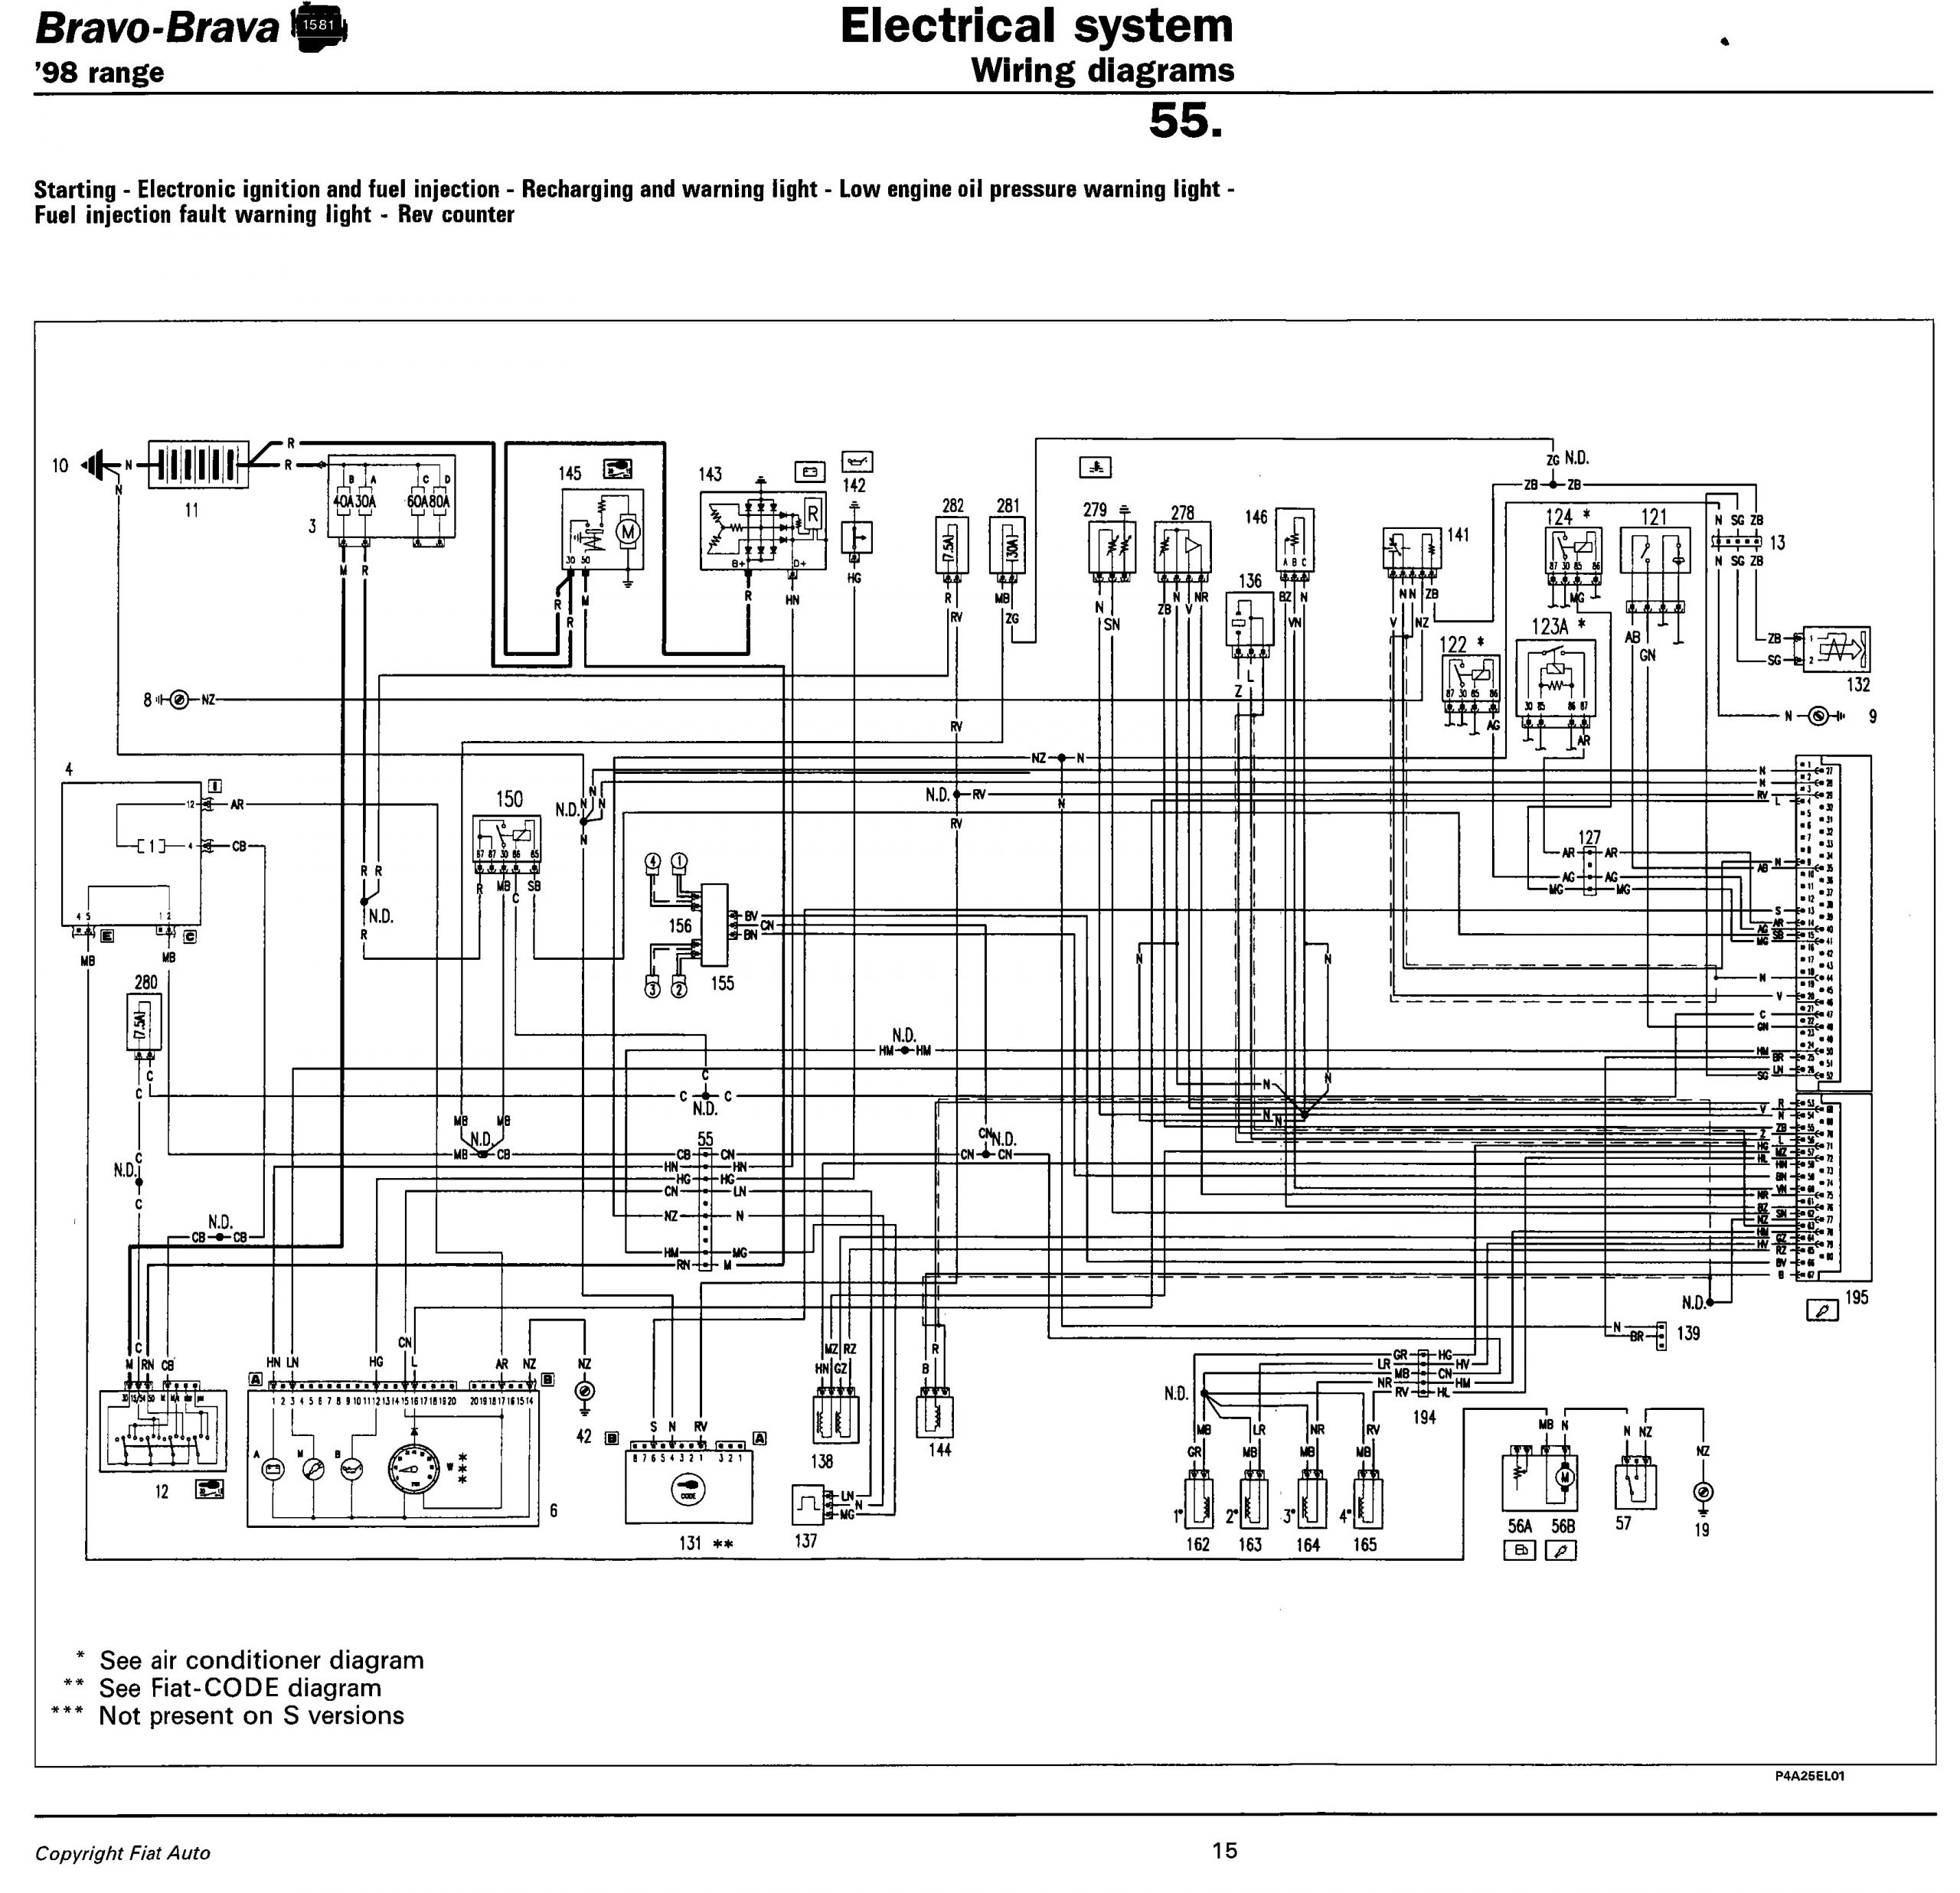 Uno Fiet Car Wiring Diagram] Fiat Fiorino Wiring Diagram Full Version Hd Quality … Of Uno Fiet Car Wiring